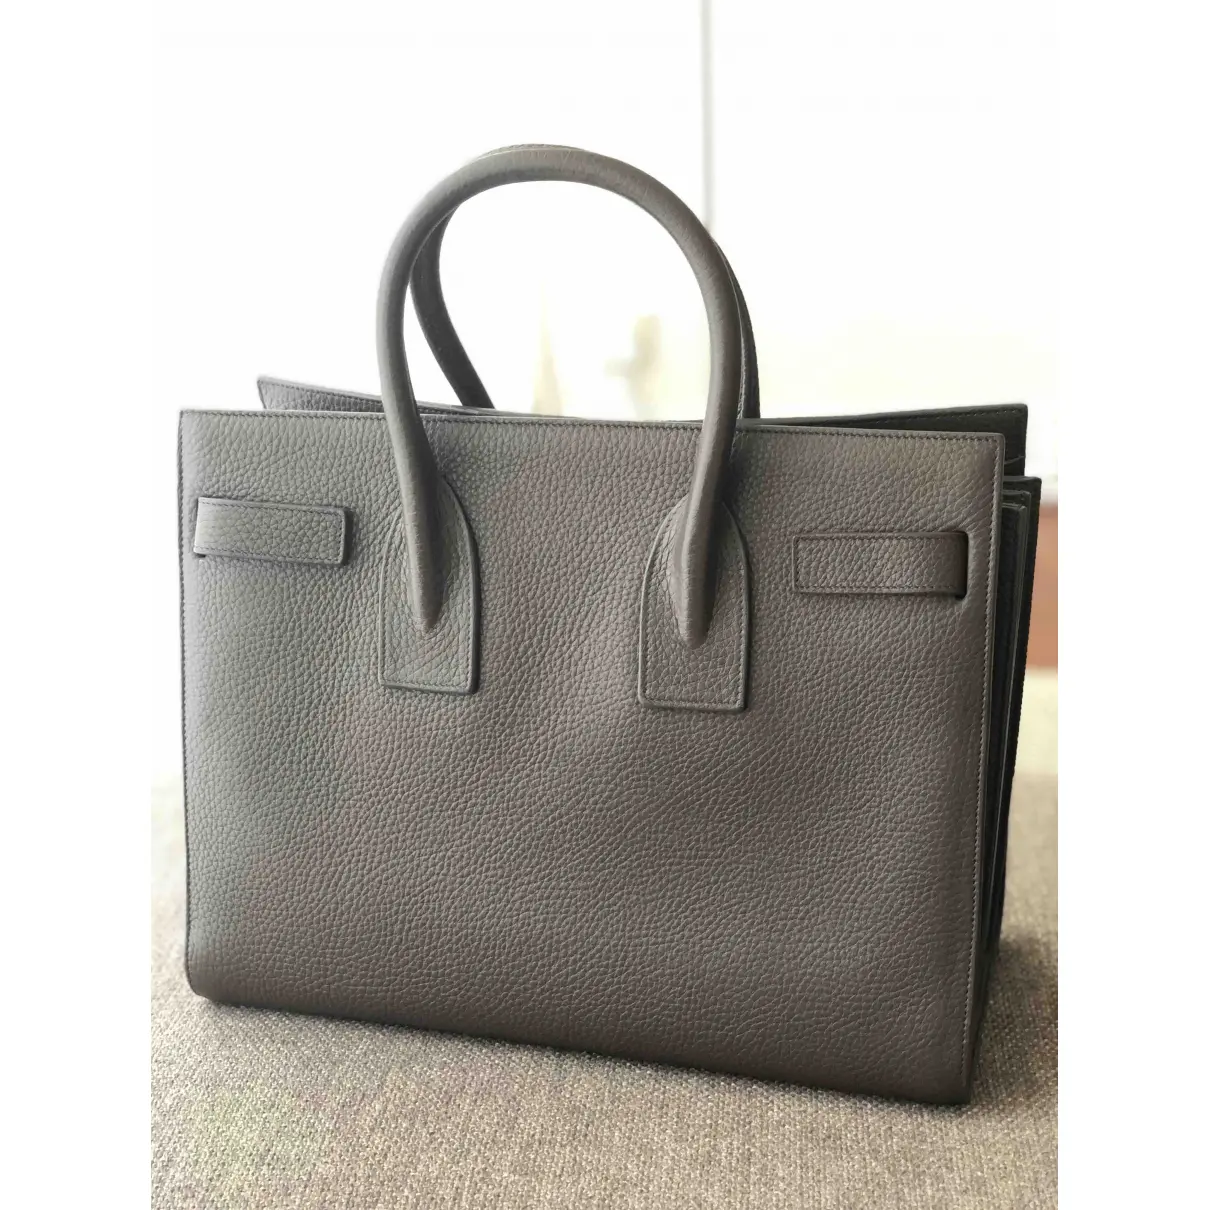 Buy Saint Laurent Sac de Jour leather handbag online